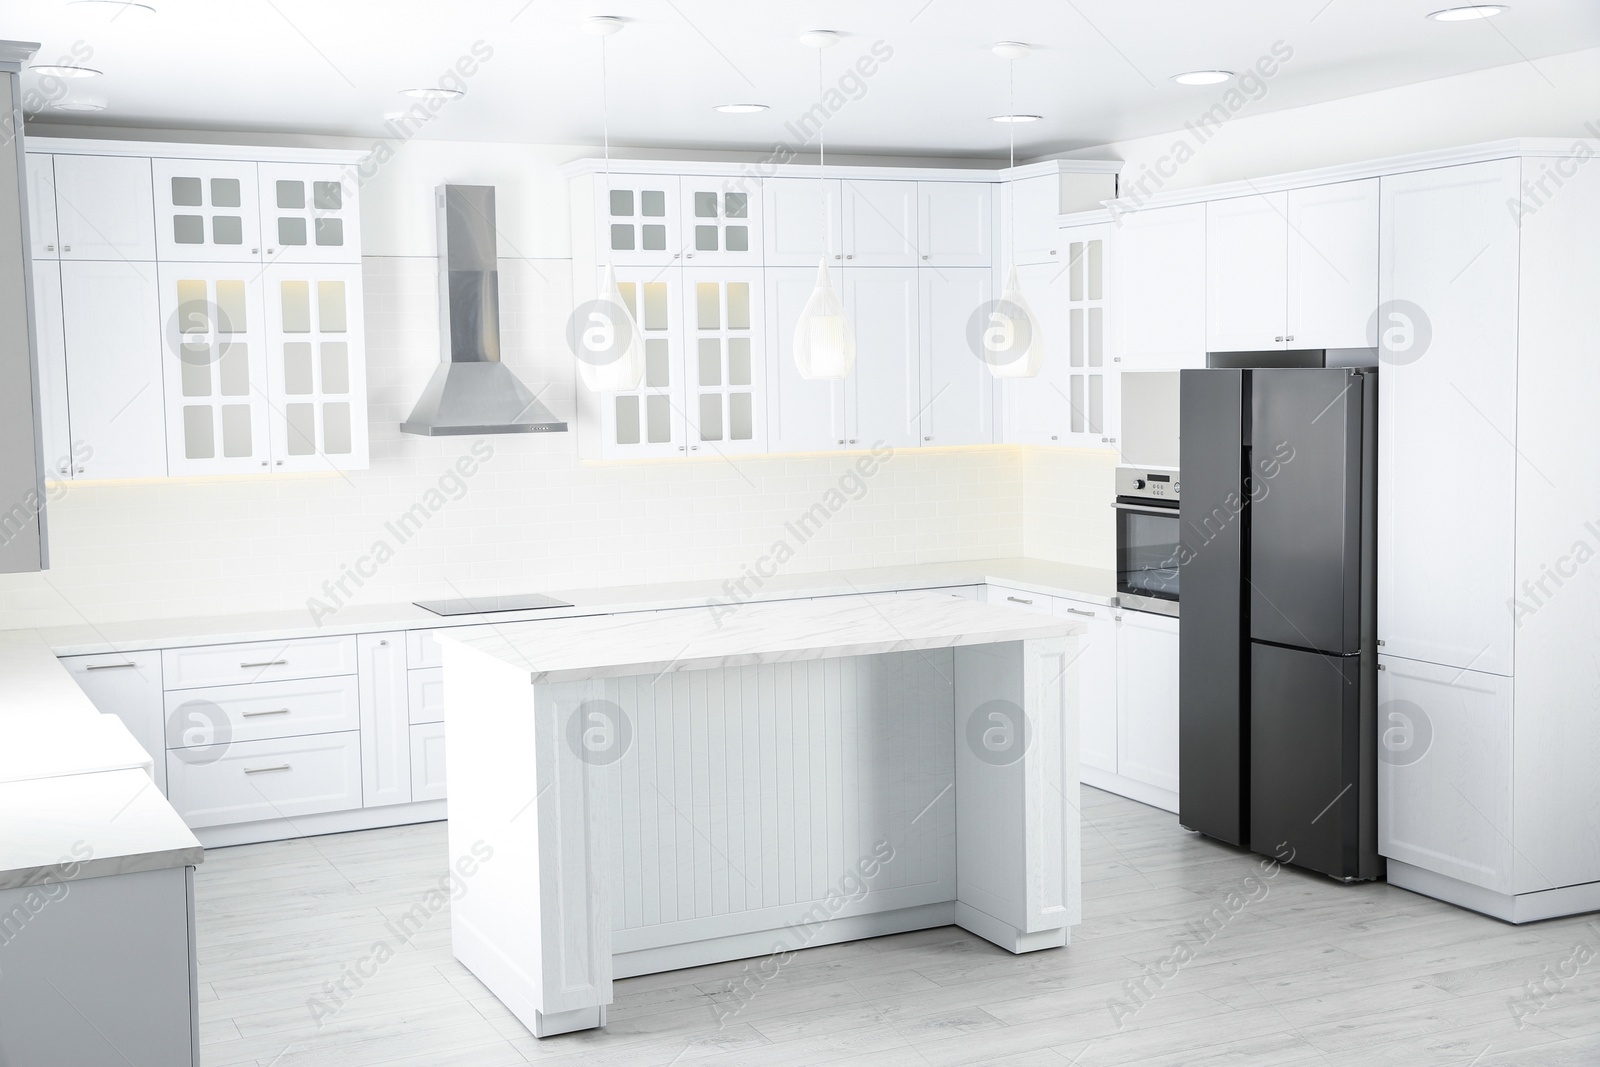 Photo of Interiormodern light kitchen with stylish furniture